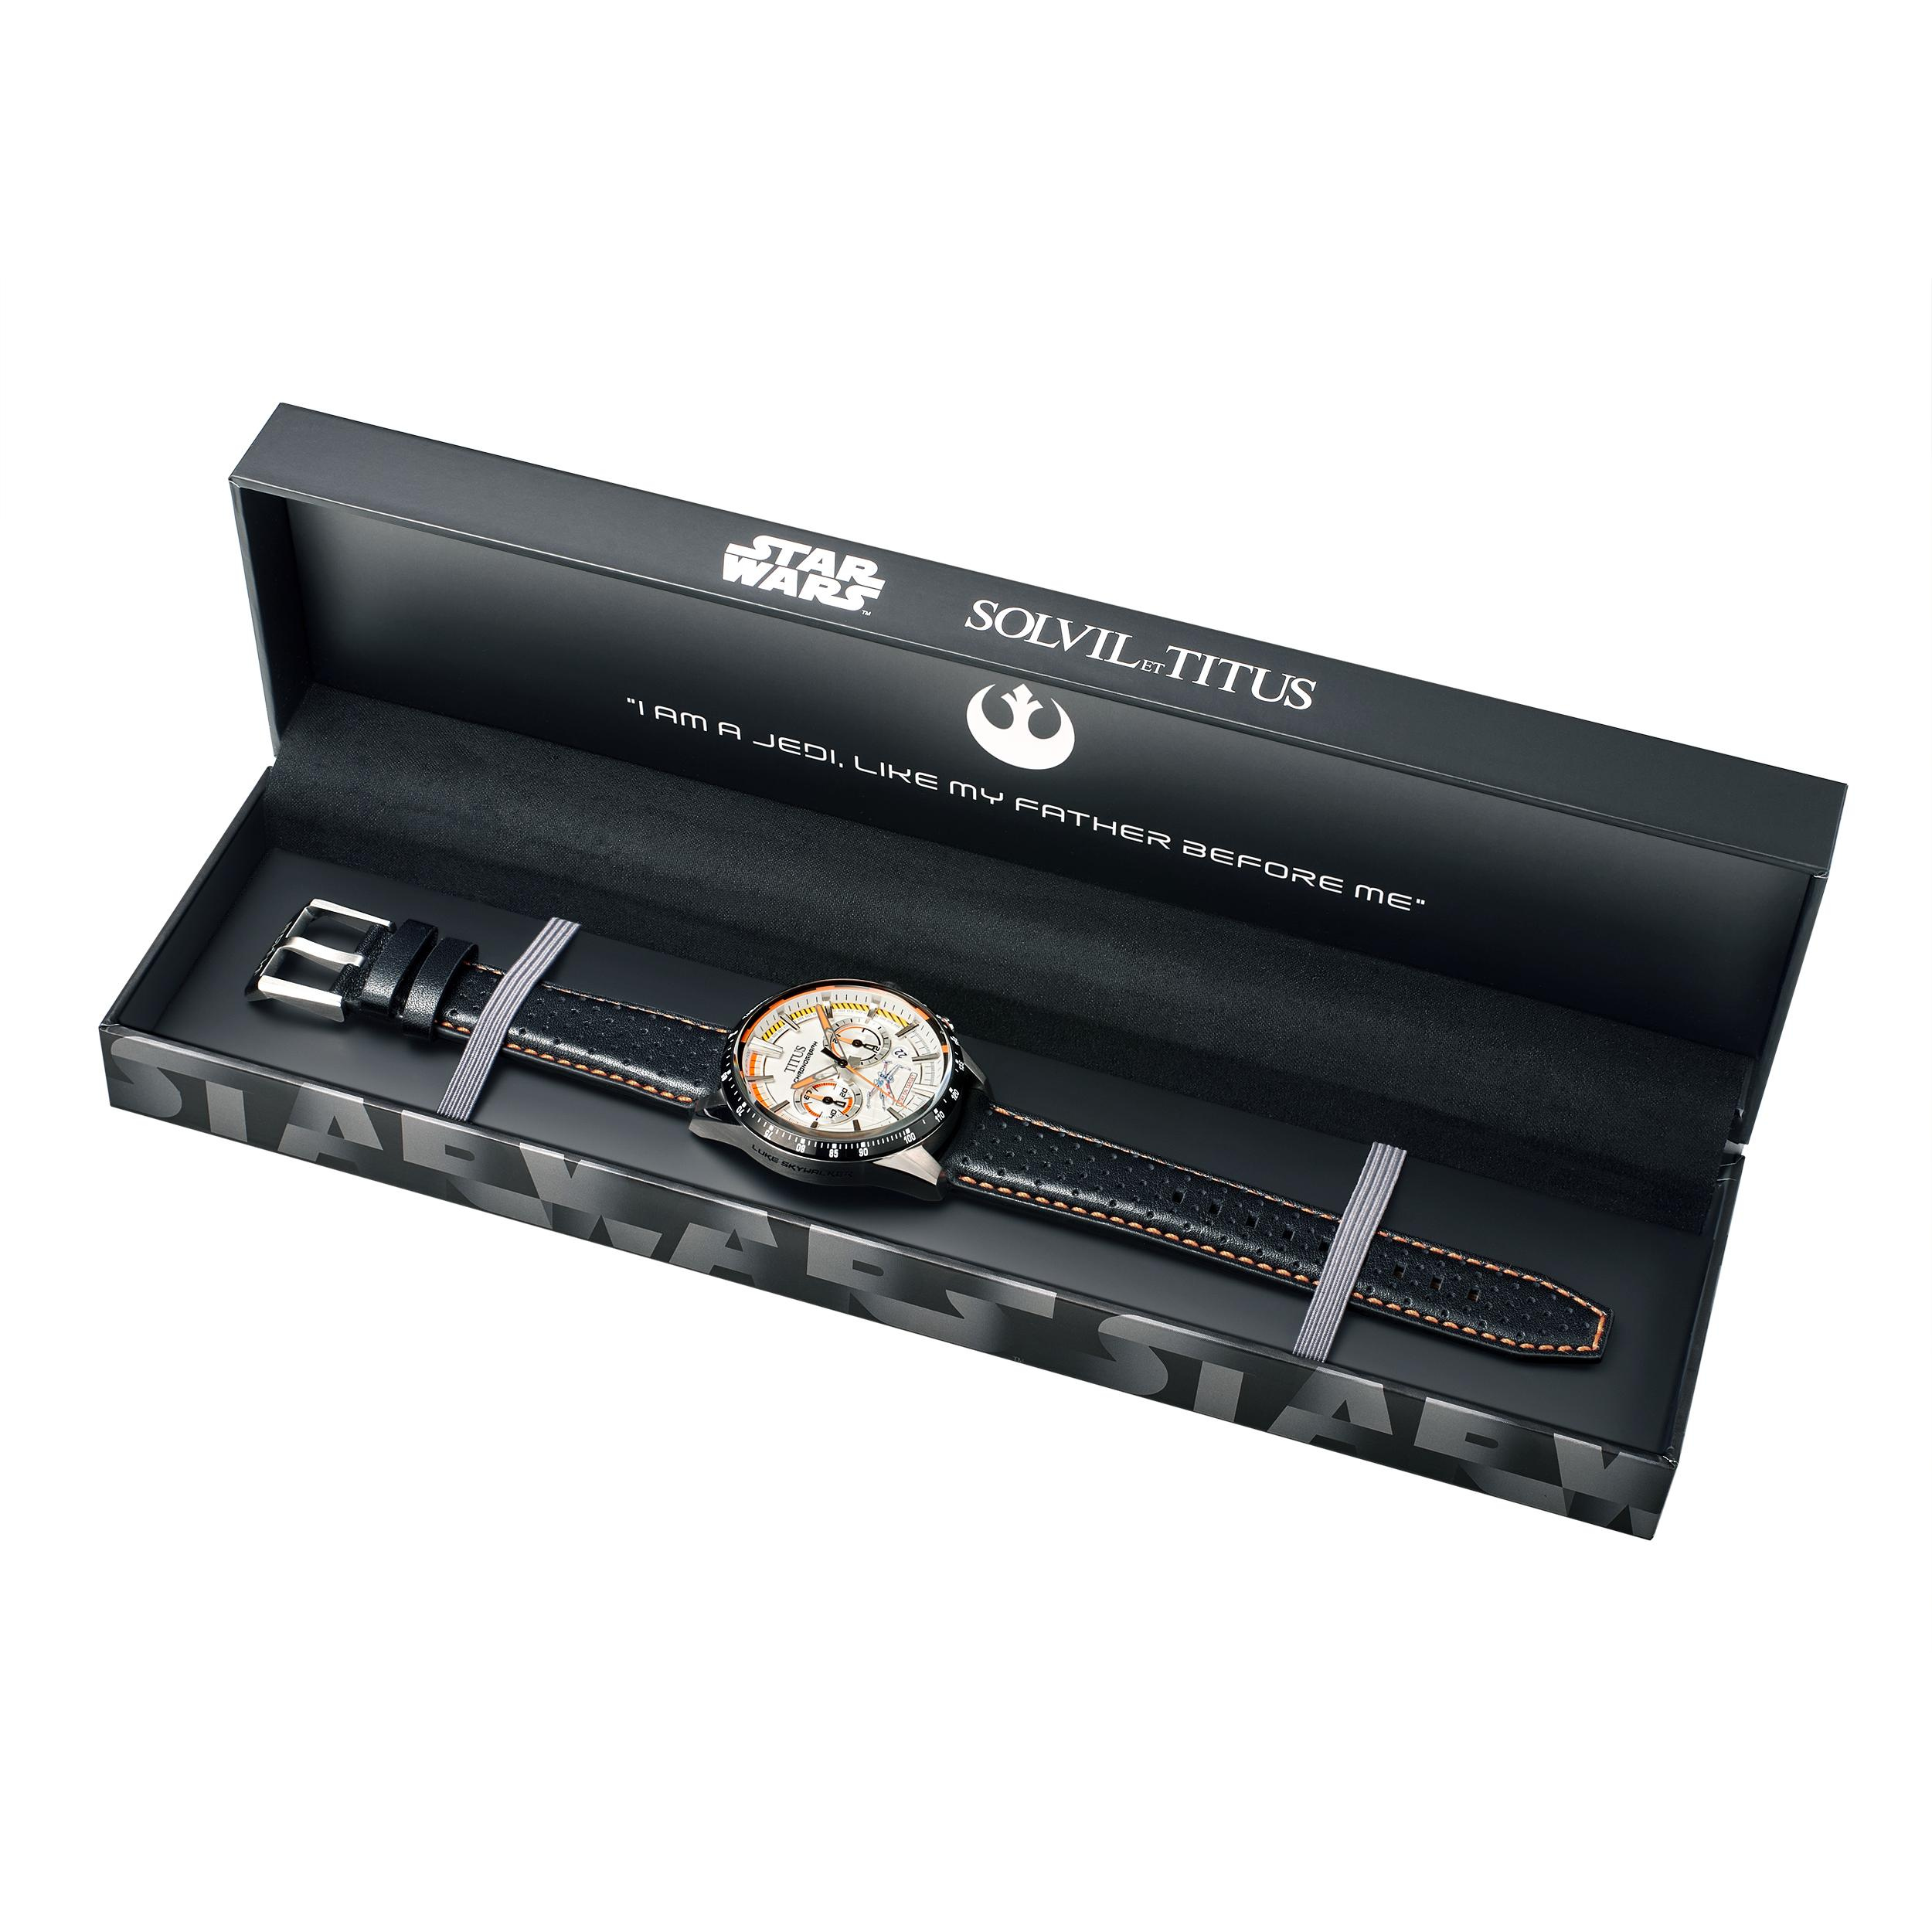 [Pre-Order] Solvil et Titus x Star Wars Limited Edition Saber "Luke Skywalker" Chronograph Watch W06-03365-005